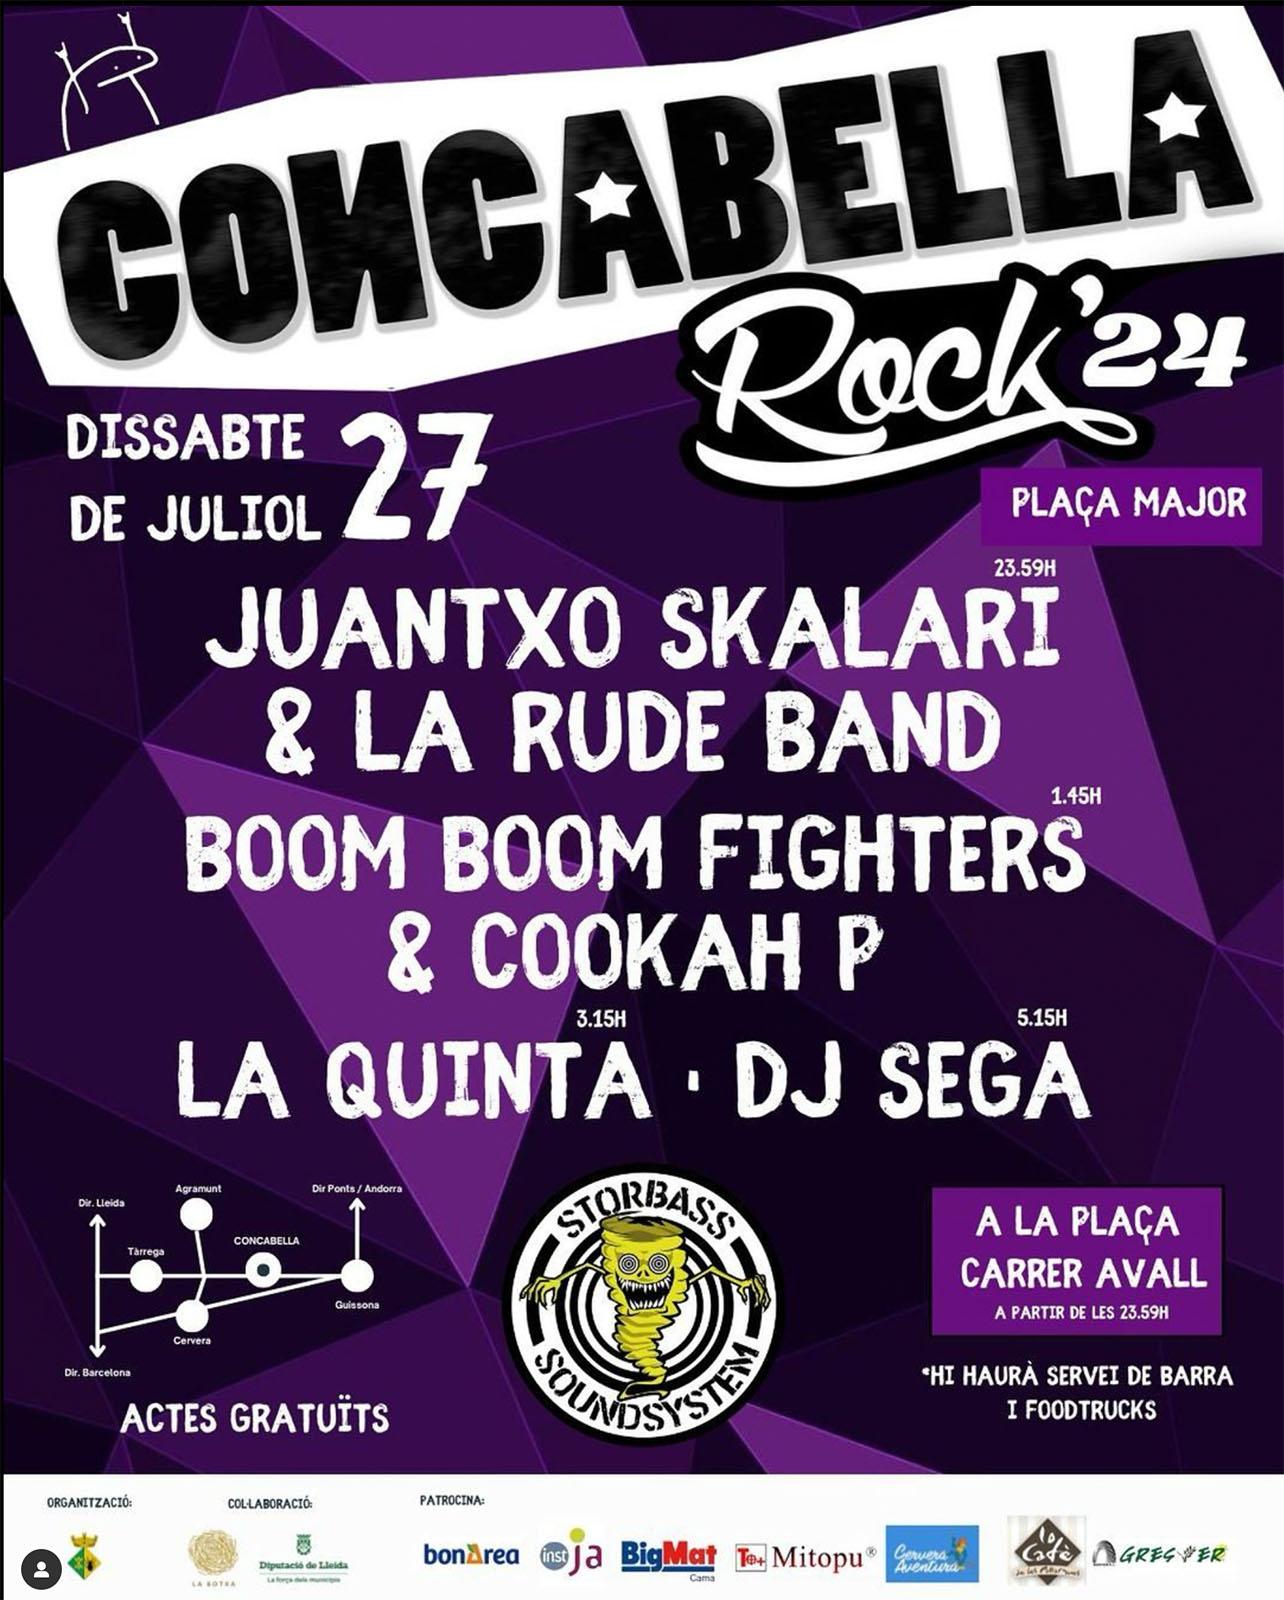 cartell Concabella Rock 24